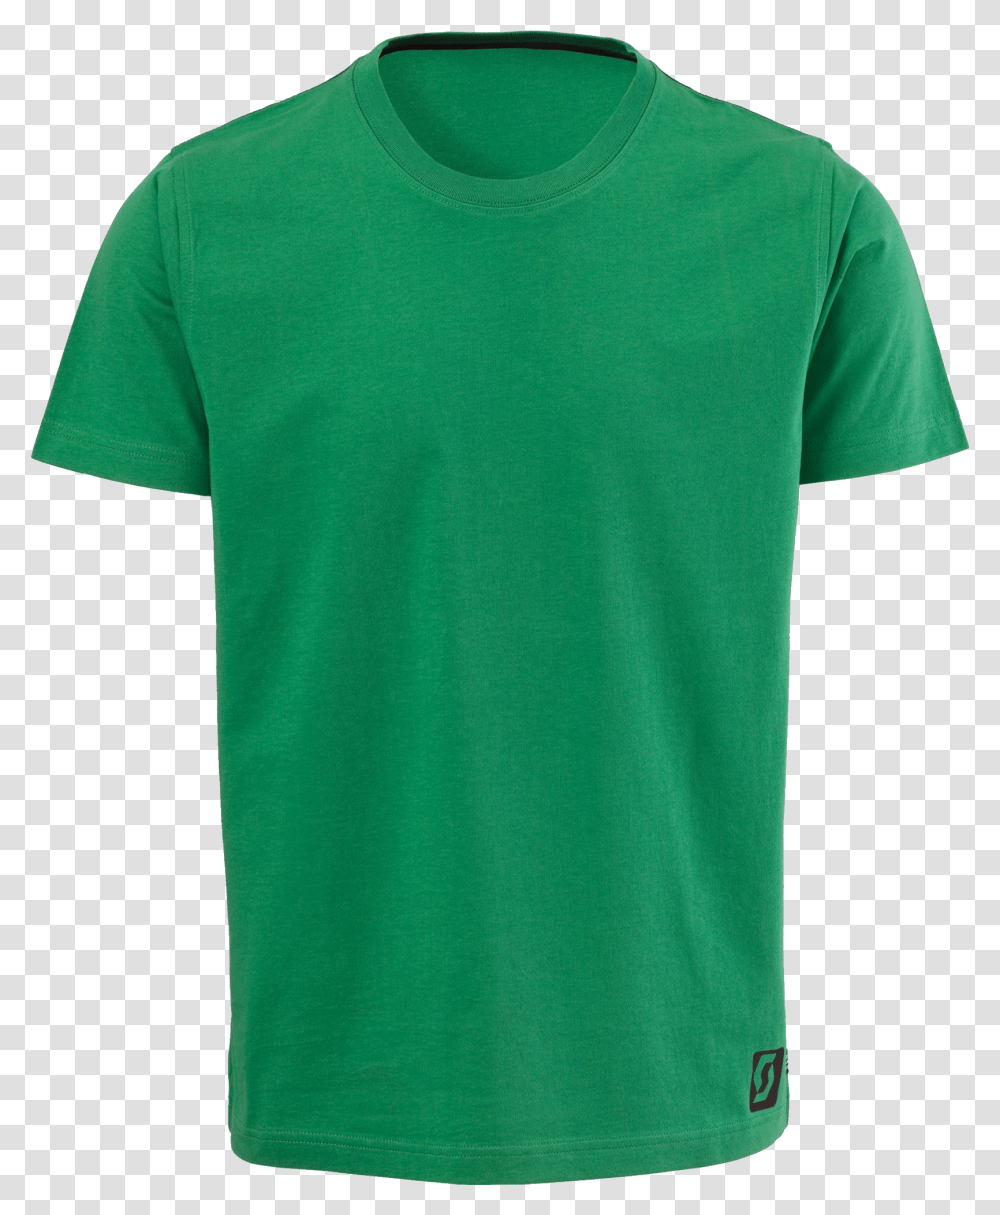 Polo Shirt Image Blank Green Shirt Mockup, Clothing, Apparel, T-Shirt, Sleeve Transparent Png